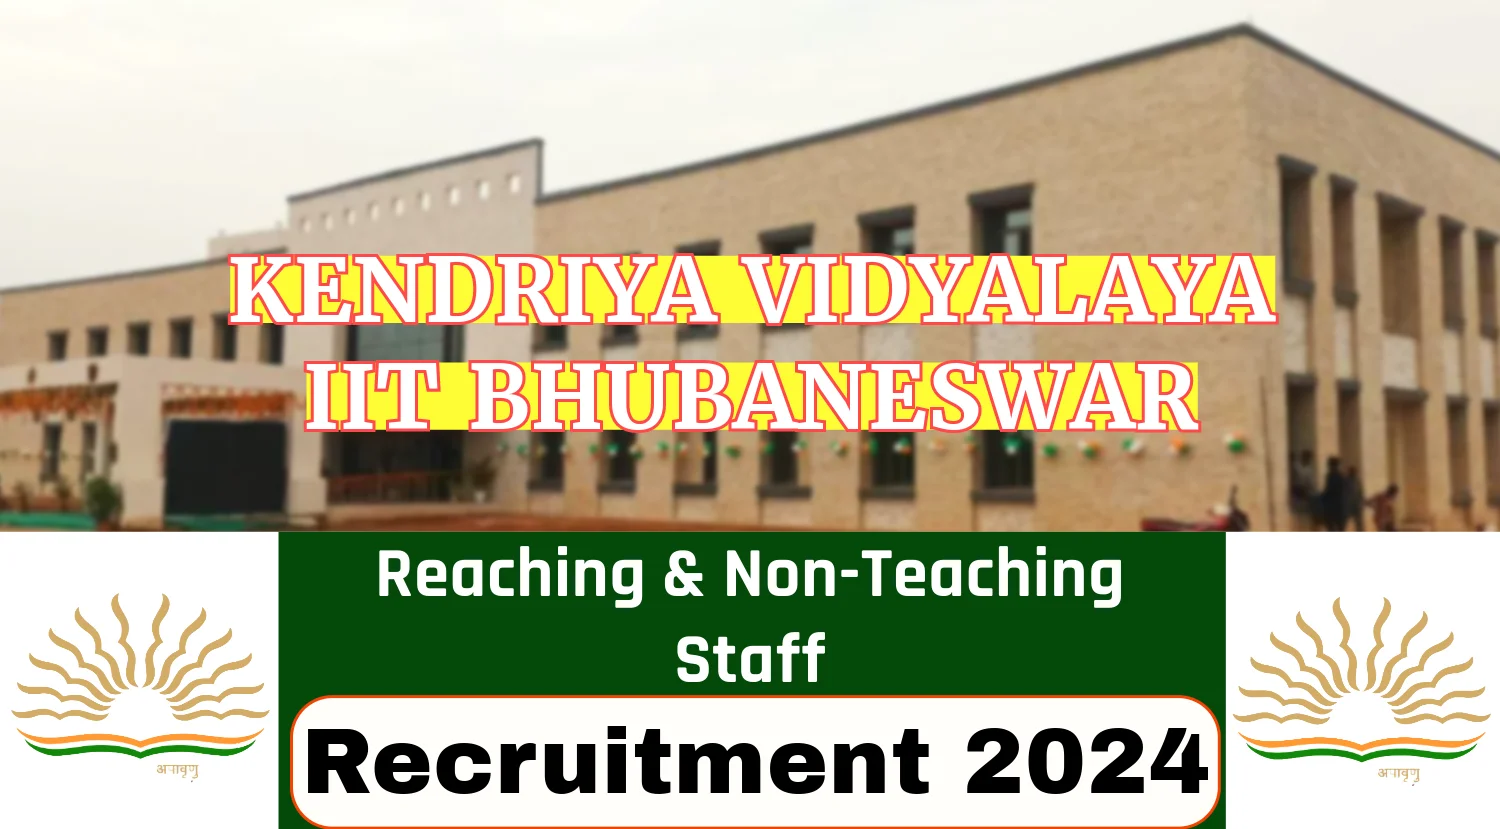 Kendriya Vidyalaya Recruitment 2024 for Various Teaching and Non-Teaching Vacancies at IIT Bhubaneswar, Check Application Process Now